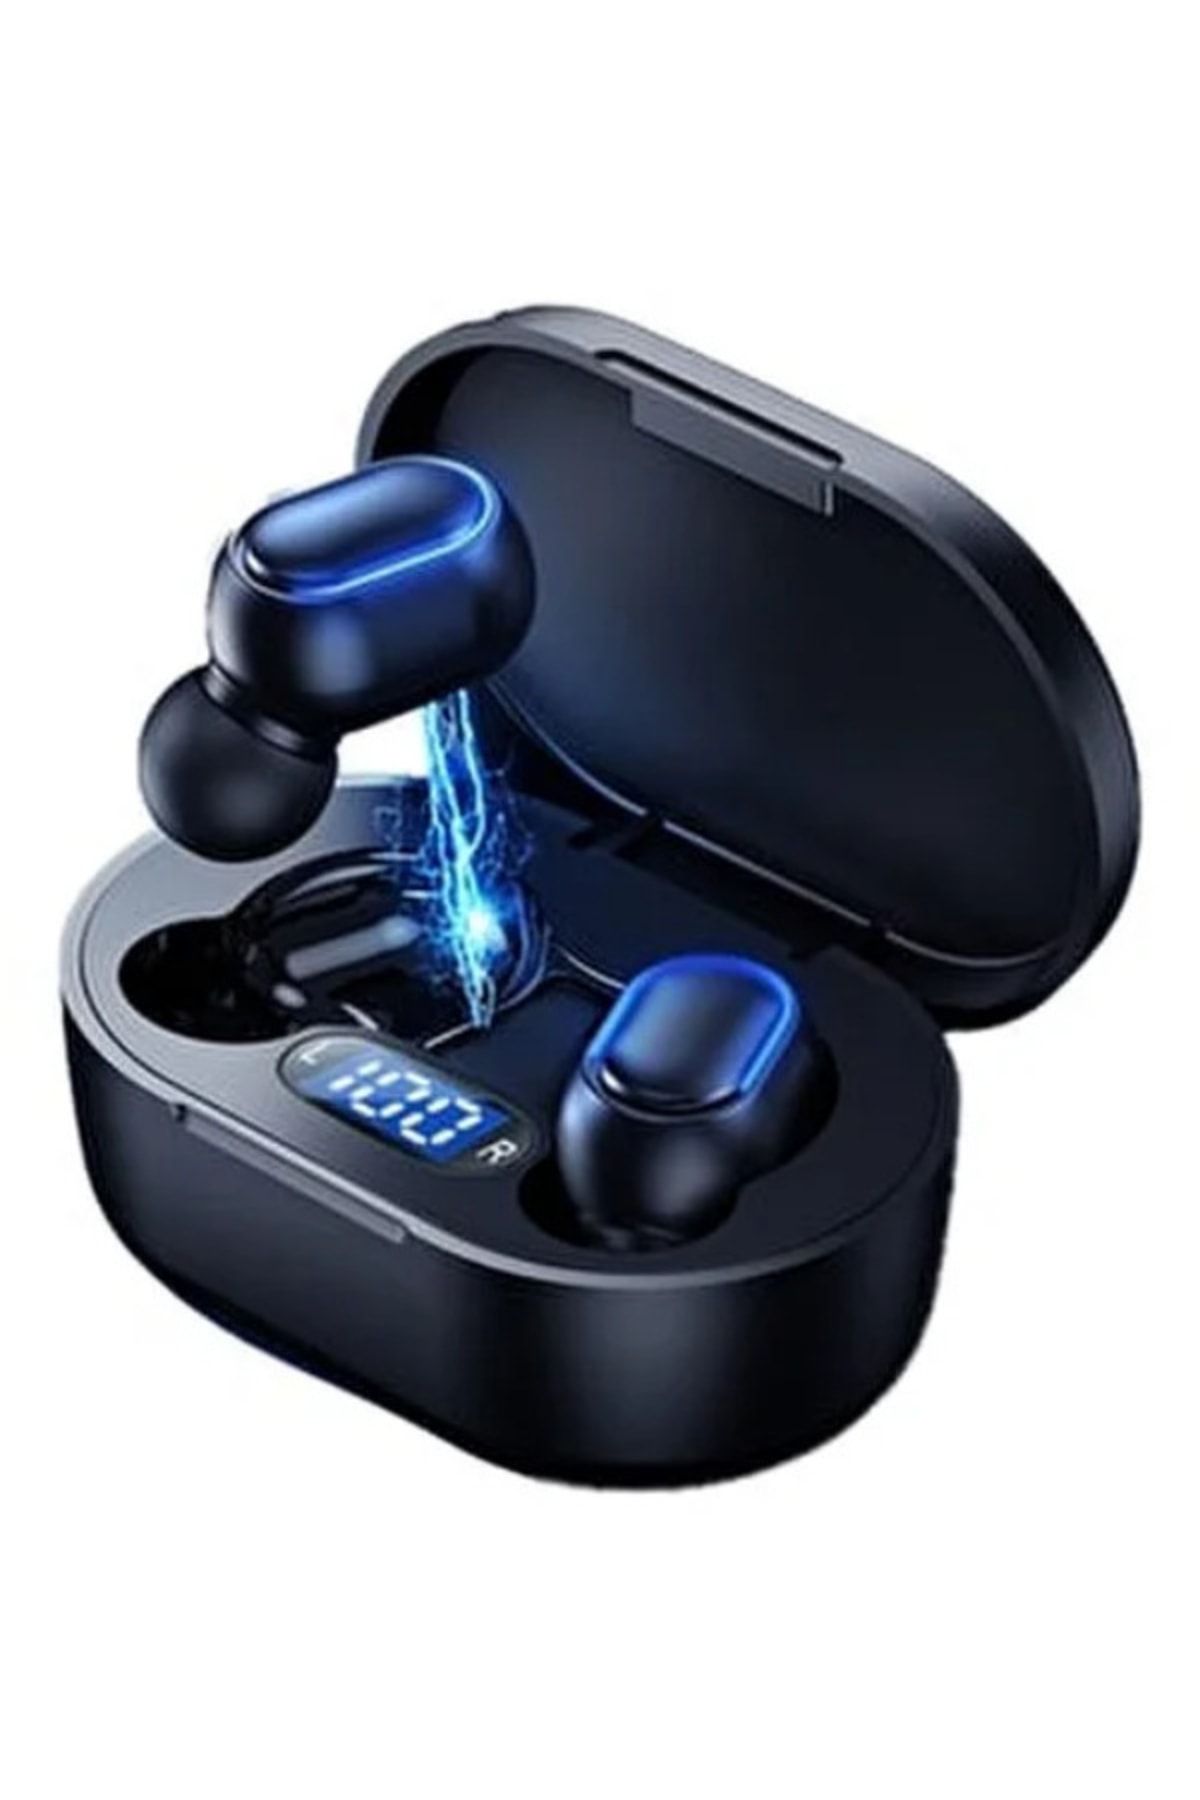 Teknoloji Gelsin E7s Dots Bluetooth Kulaklık Çift Mikrofonlu Extra Bass Kulak Içi Tws Kablosuz Kulaklık V5.0 Hd Ses